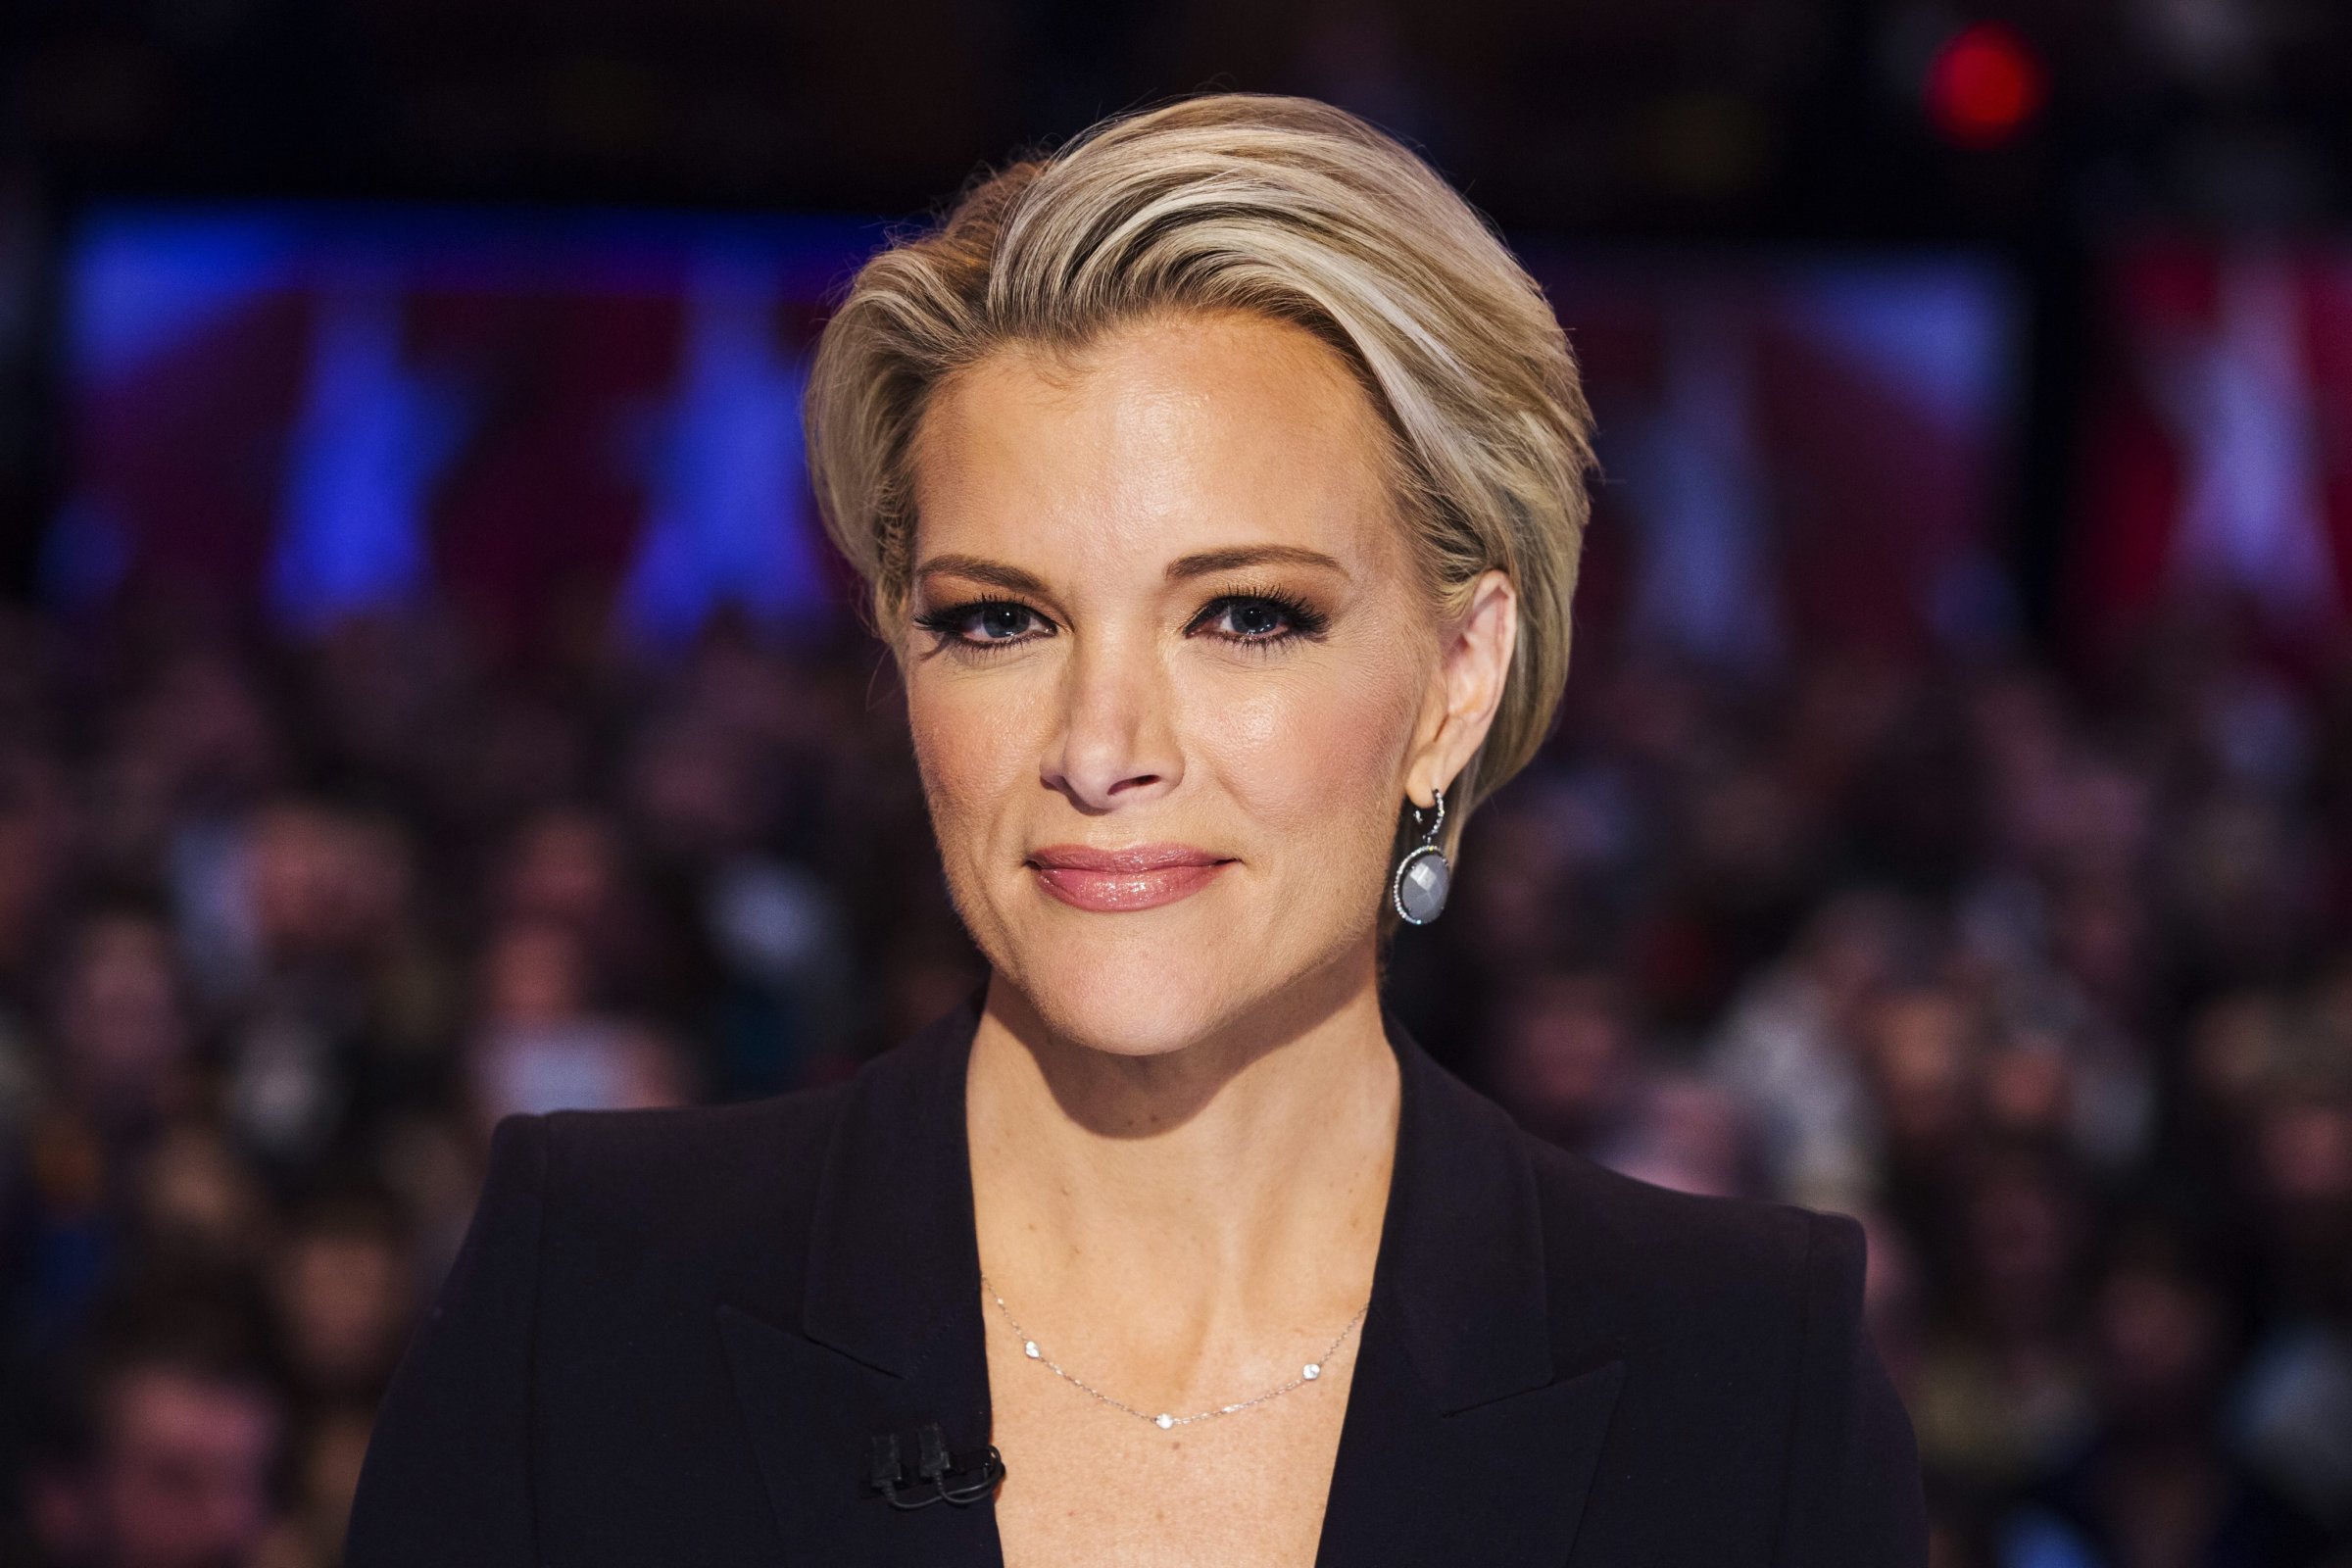 Fox News debate moderator Megyn Kelly at the Republican presidential debate Thursday, Jan. 28, 2016, in Des Moines, Iowa.